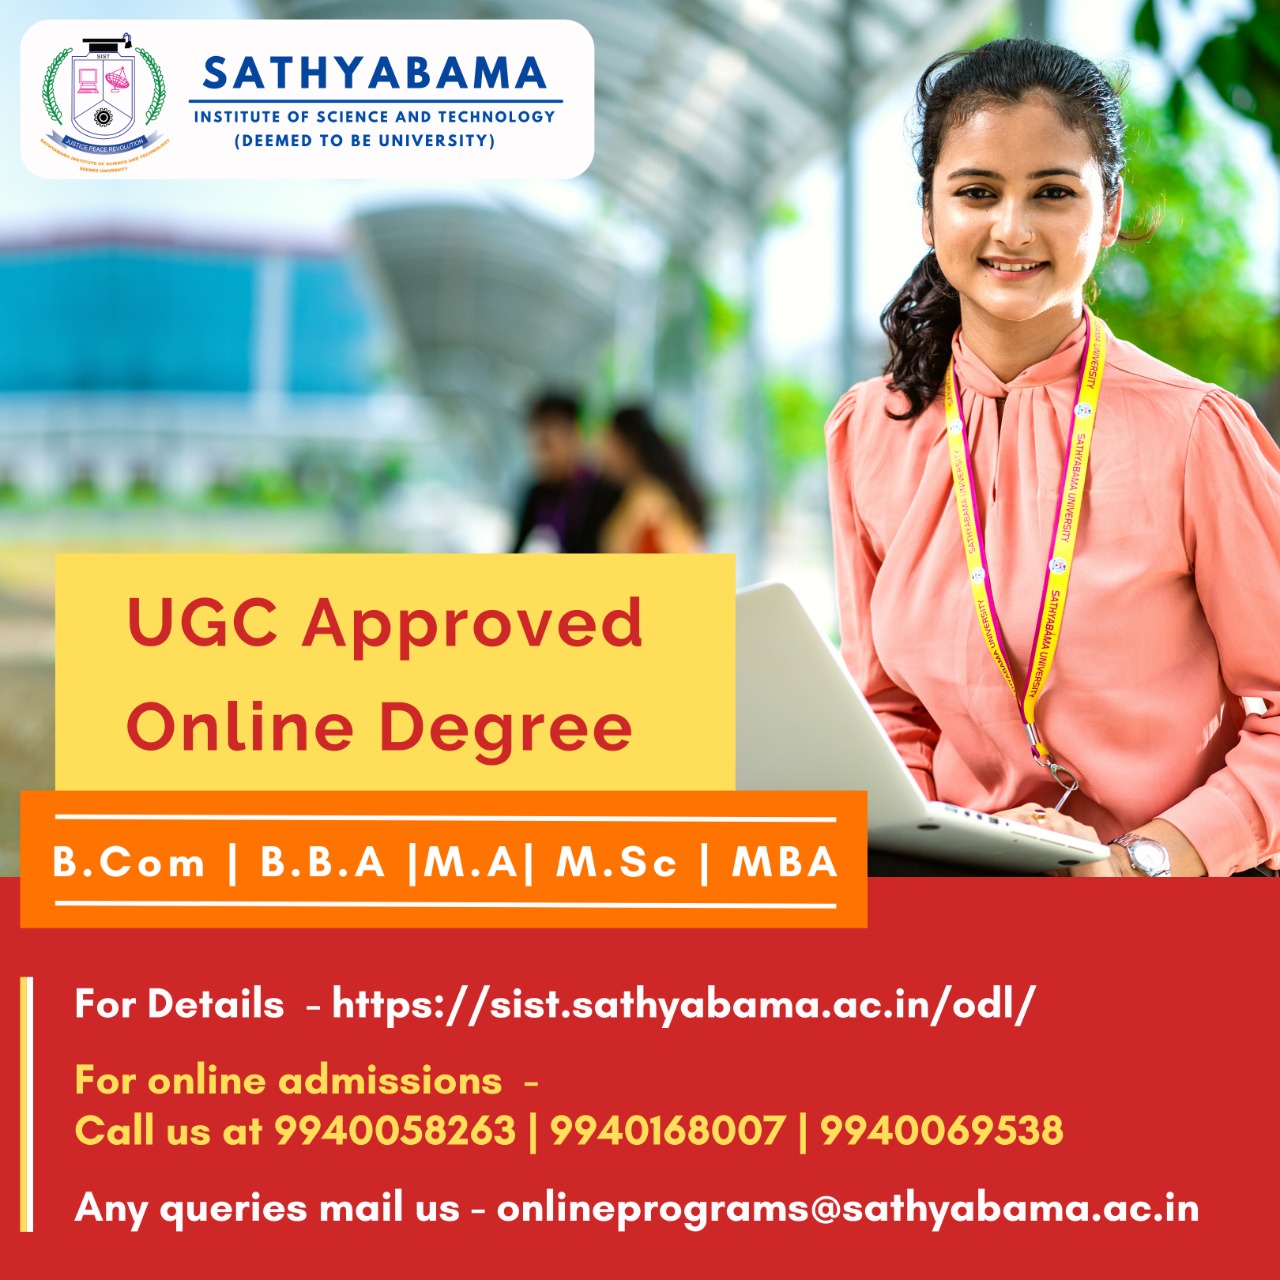 UGC Approved Online Degree B.Com|B.B.A|M.A|M.Sc|M.B.A - Admissions Open